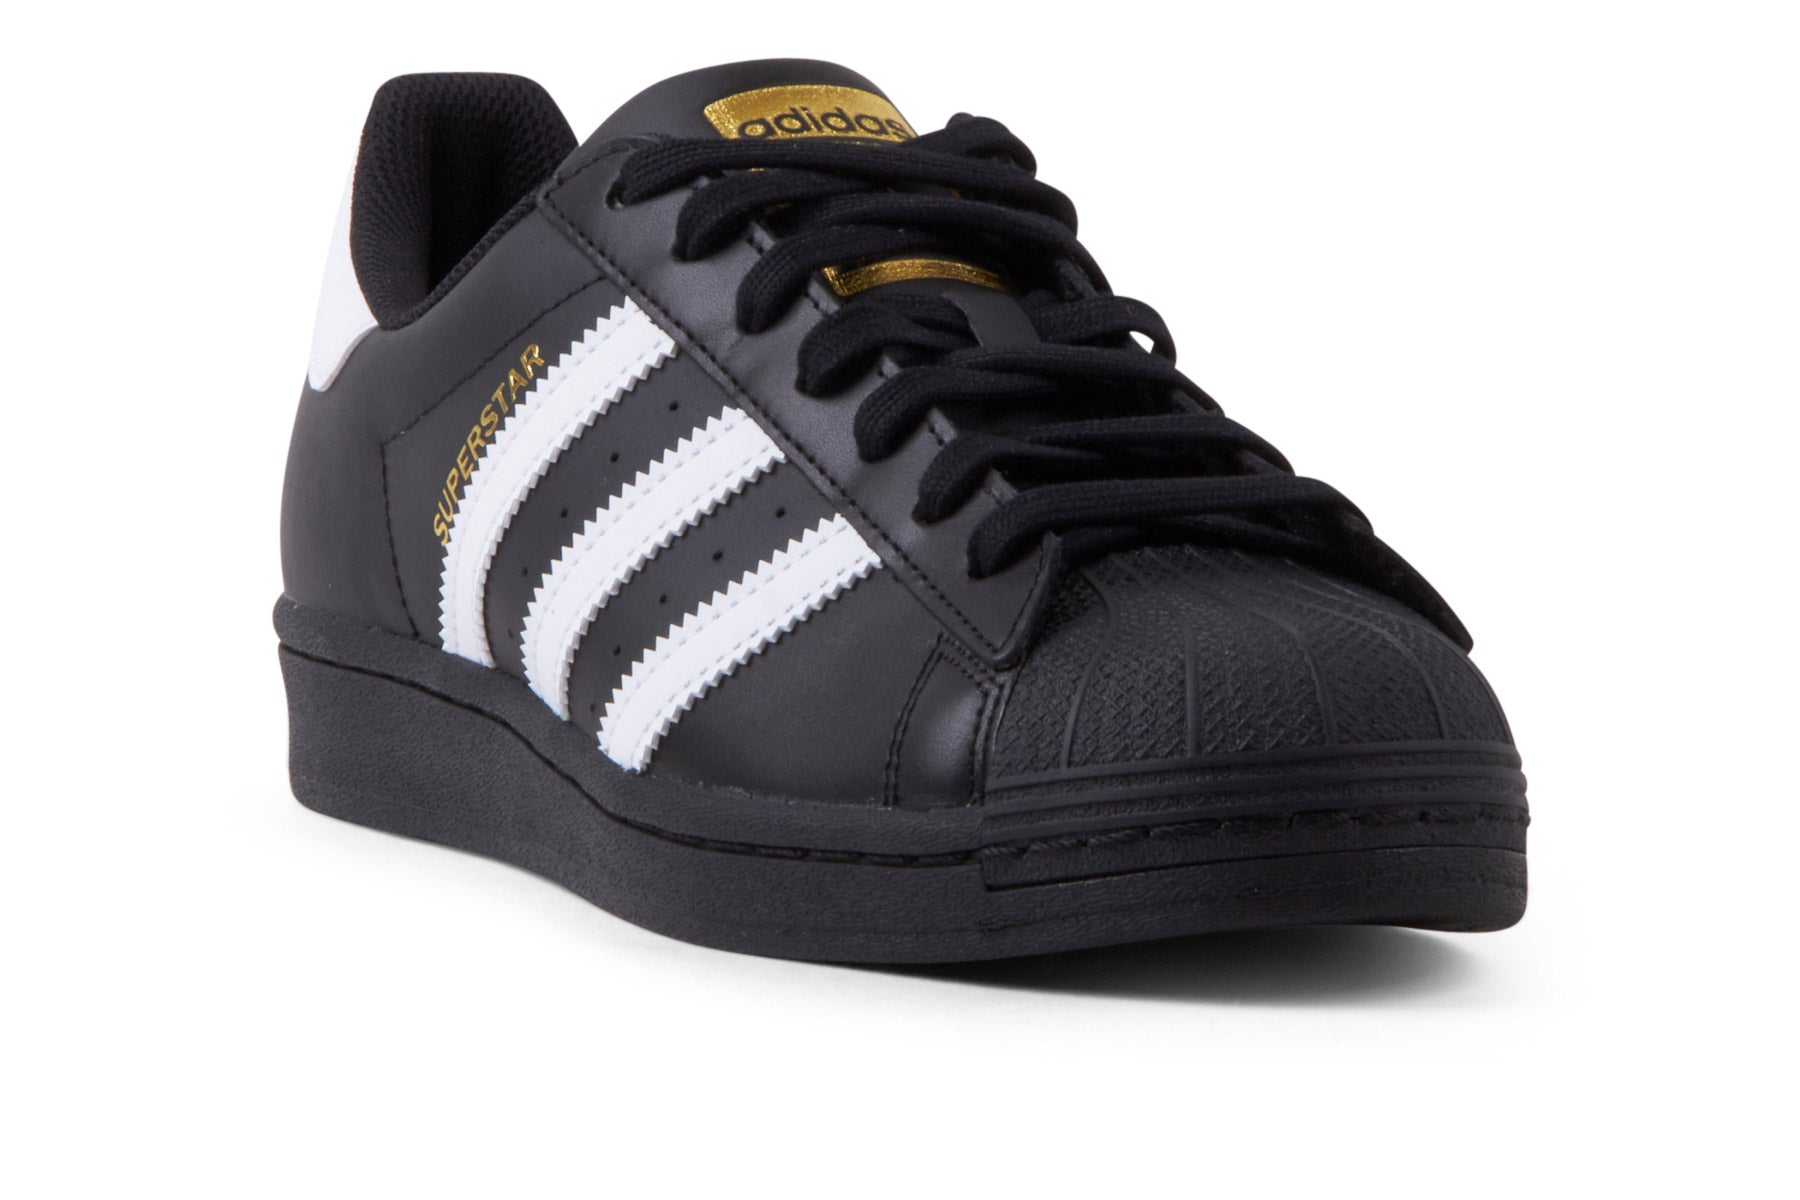 Adidas Superstar - Core Black/Footwear White